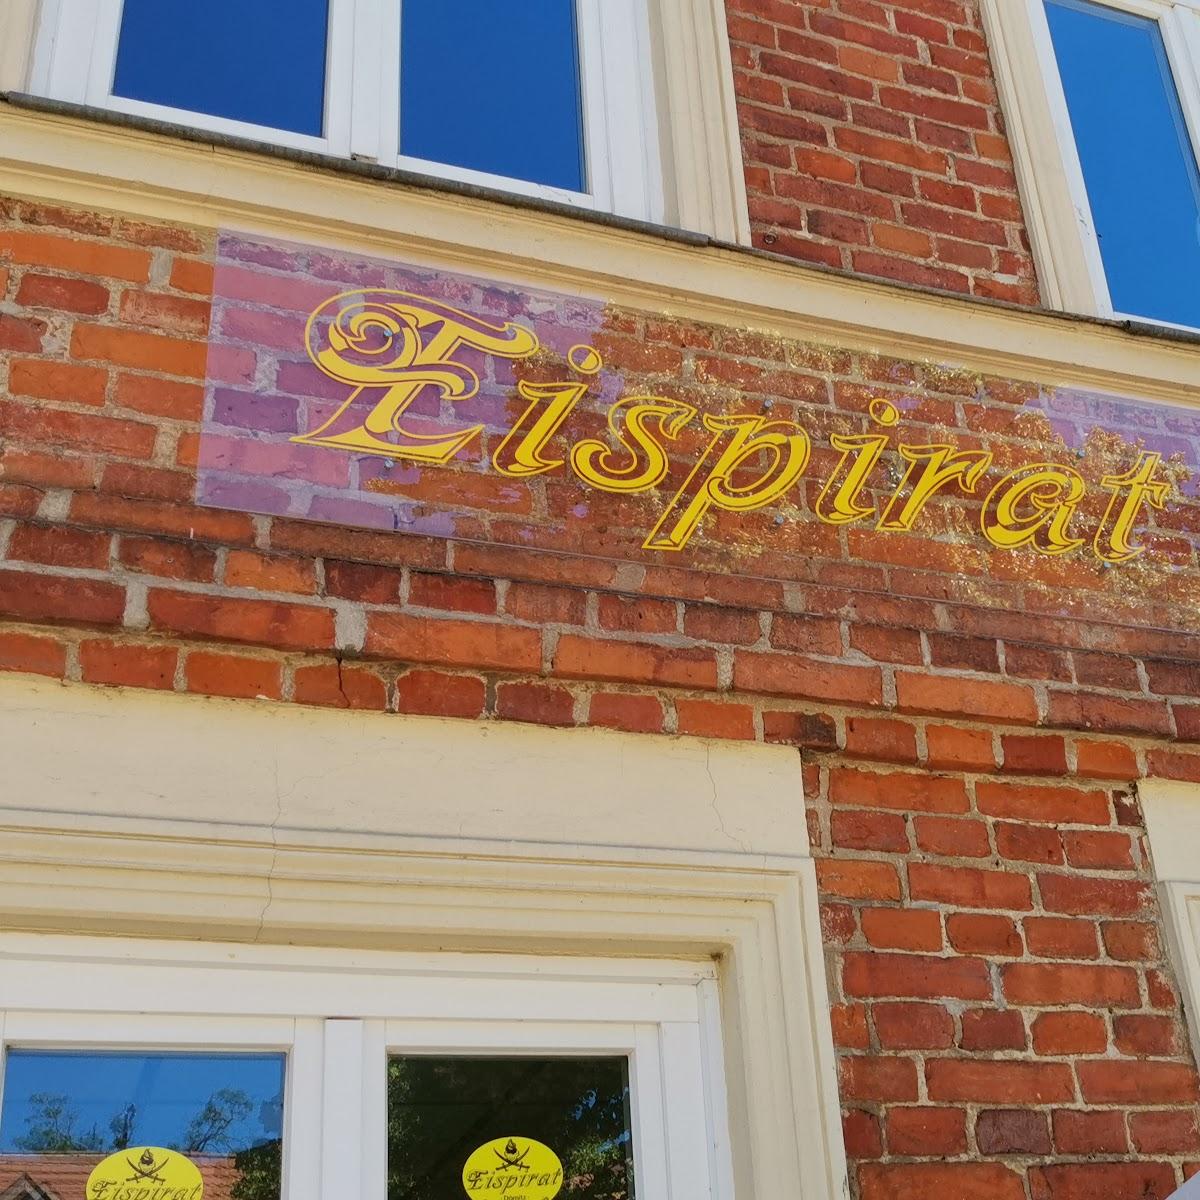 Restaurant "Eispirat" in Ludwigslust